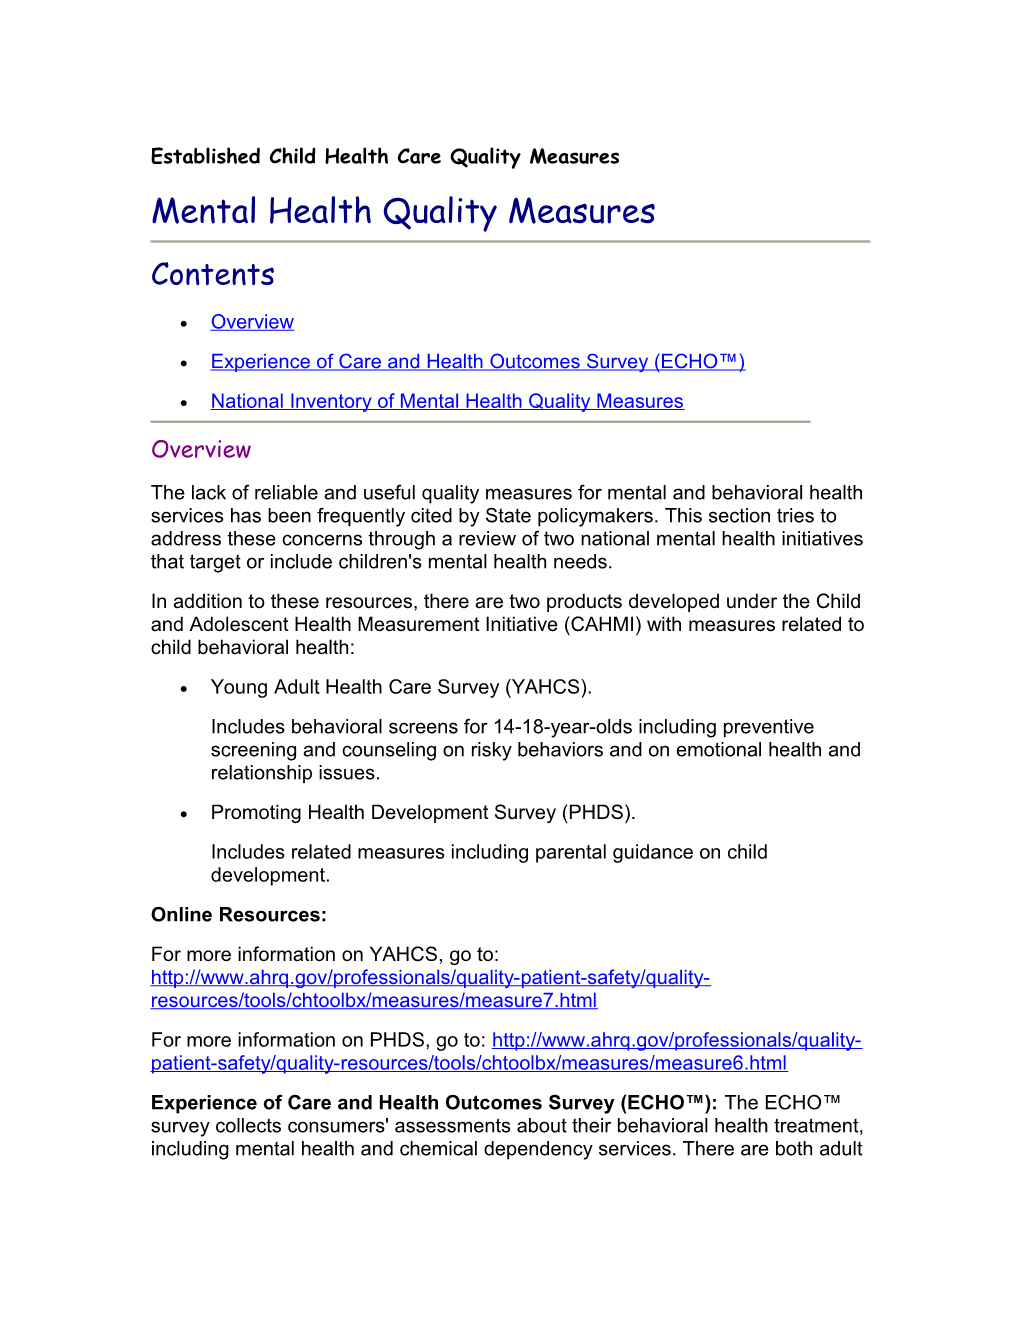 Mental Health Quality Measures